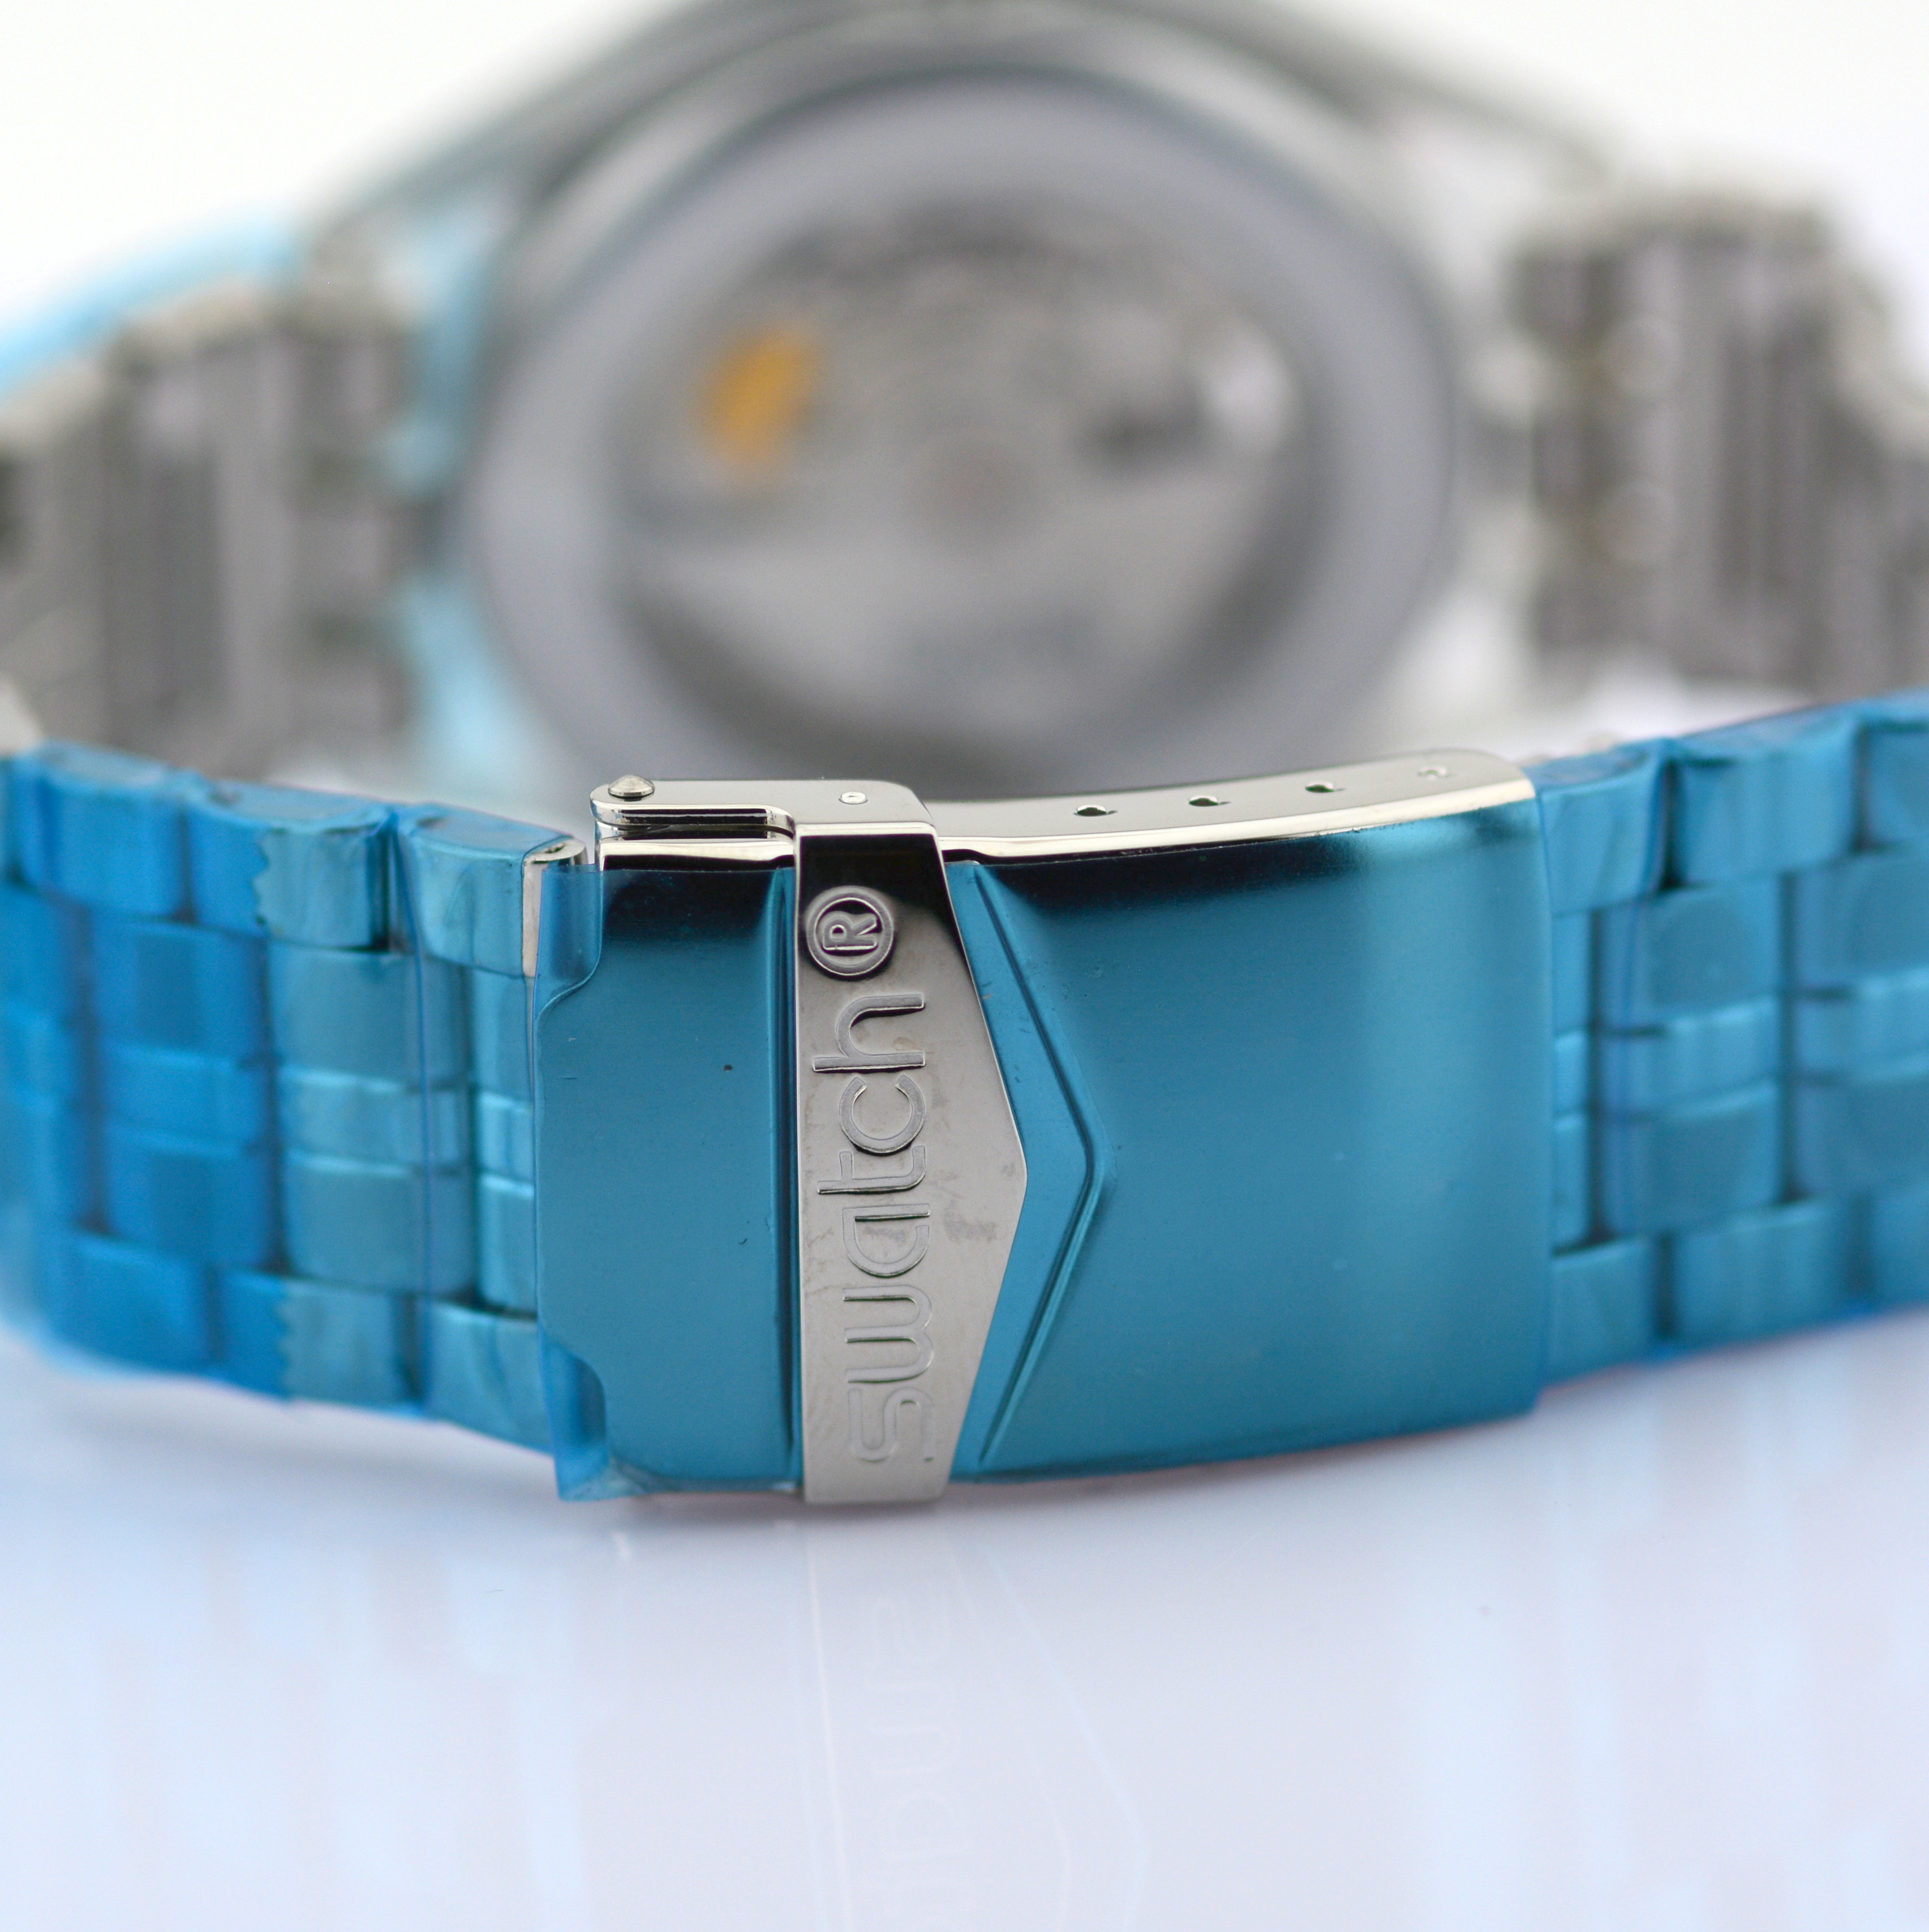 Swatch / Diaphane Irony Automatic - (Unworn) Unisex Steel Wrist Watch - Image 4 of 6